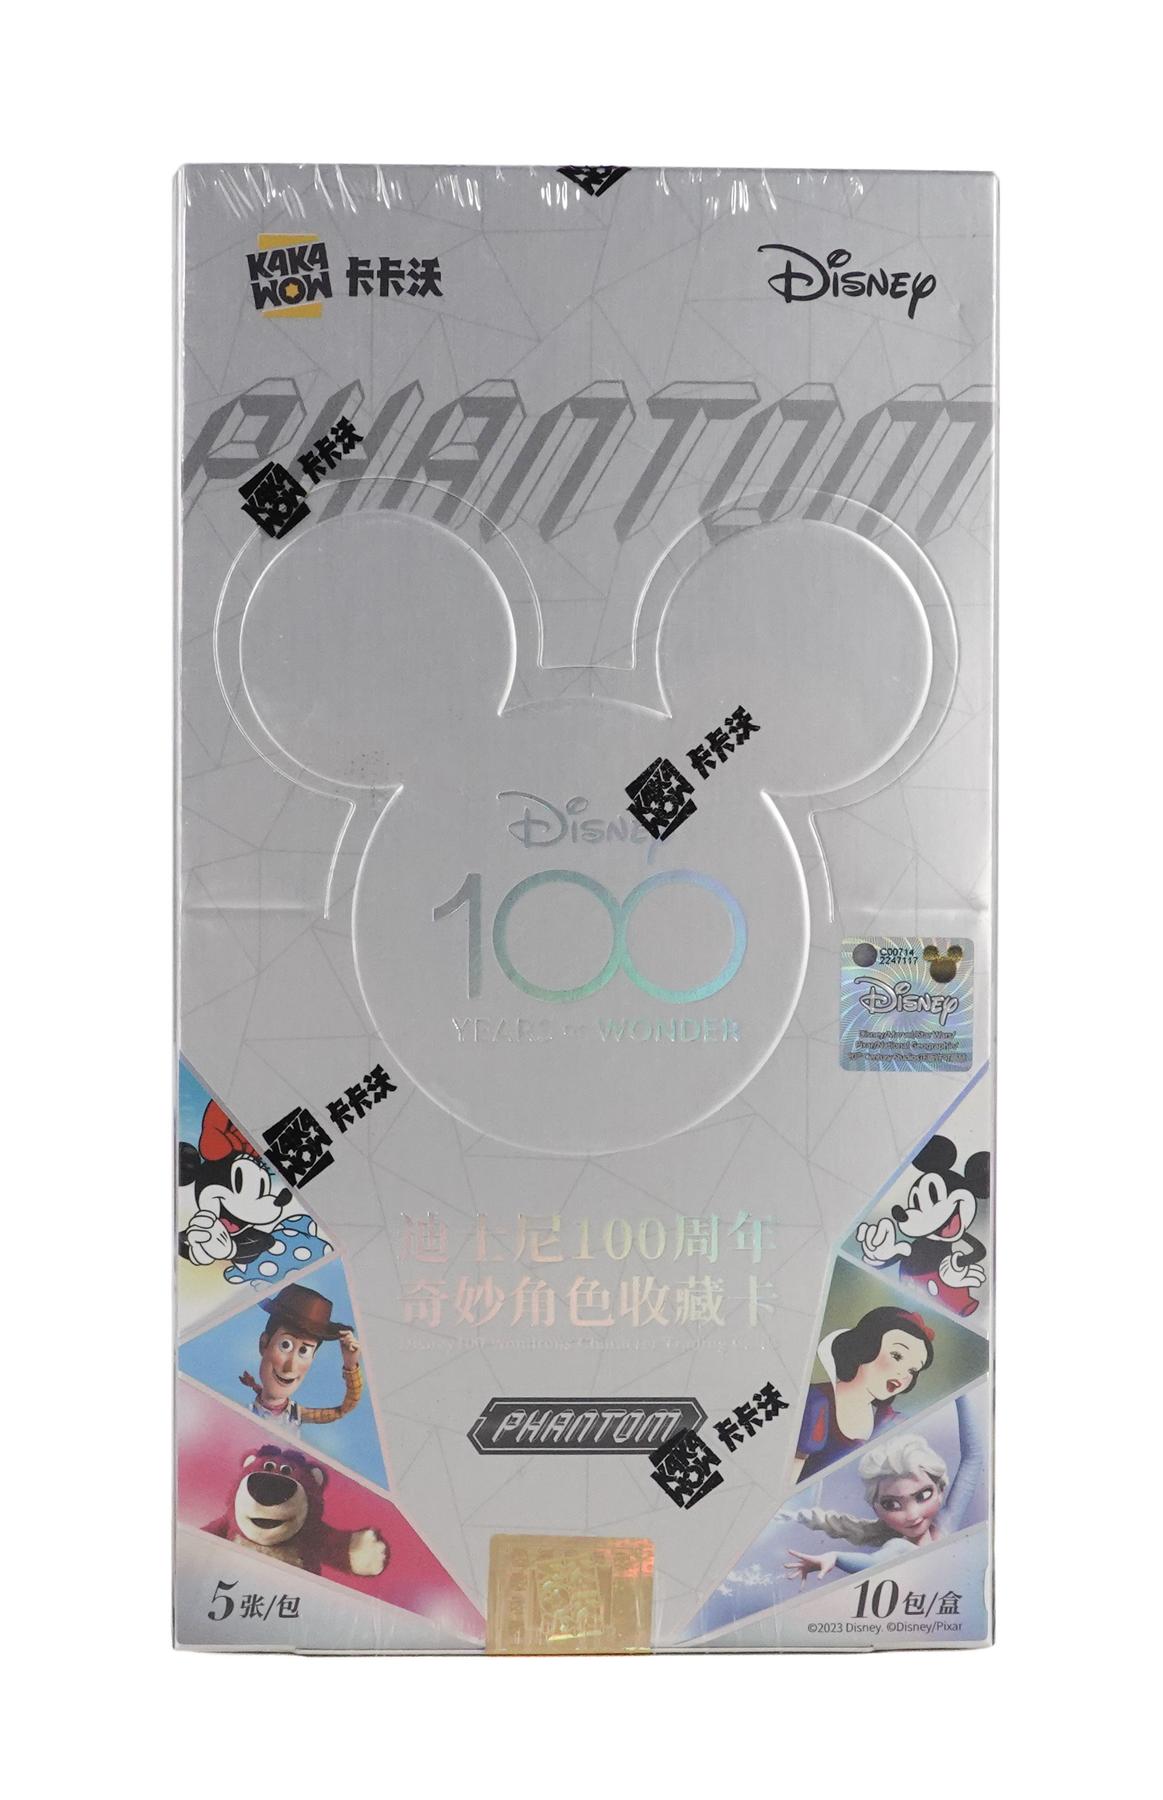 Disney100 ディズニー100 海外限定トレーディングカード ズートピア ☆古典☆